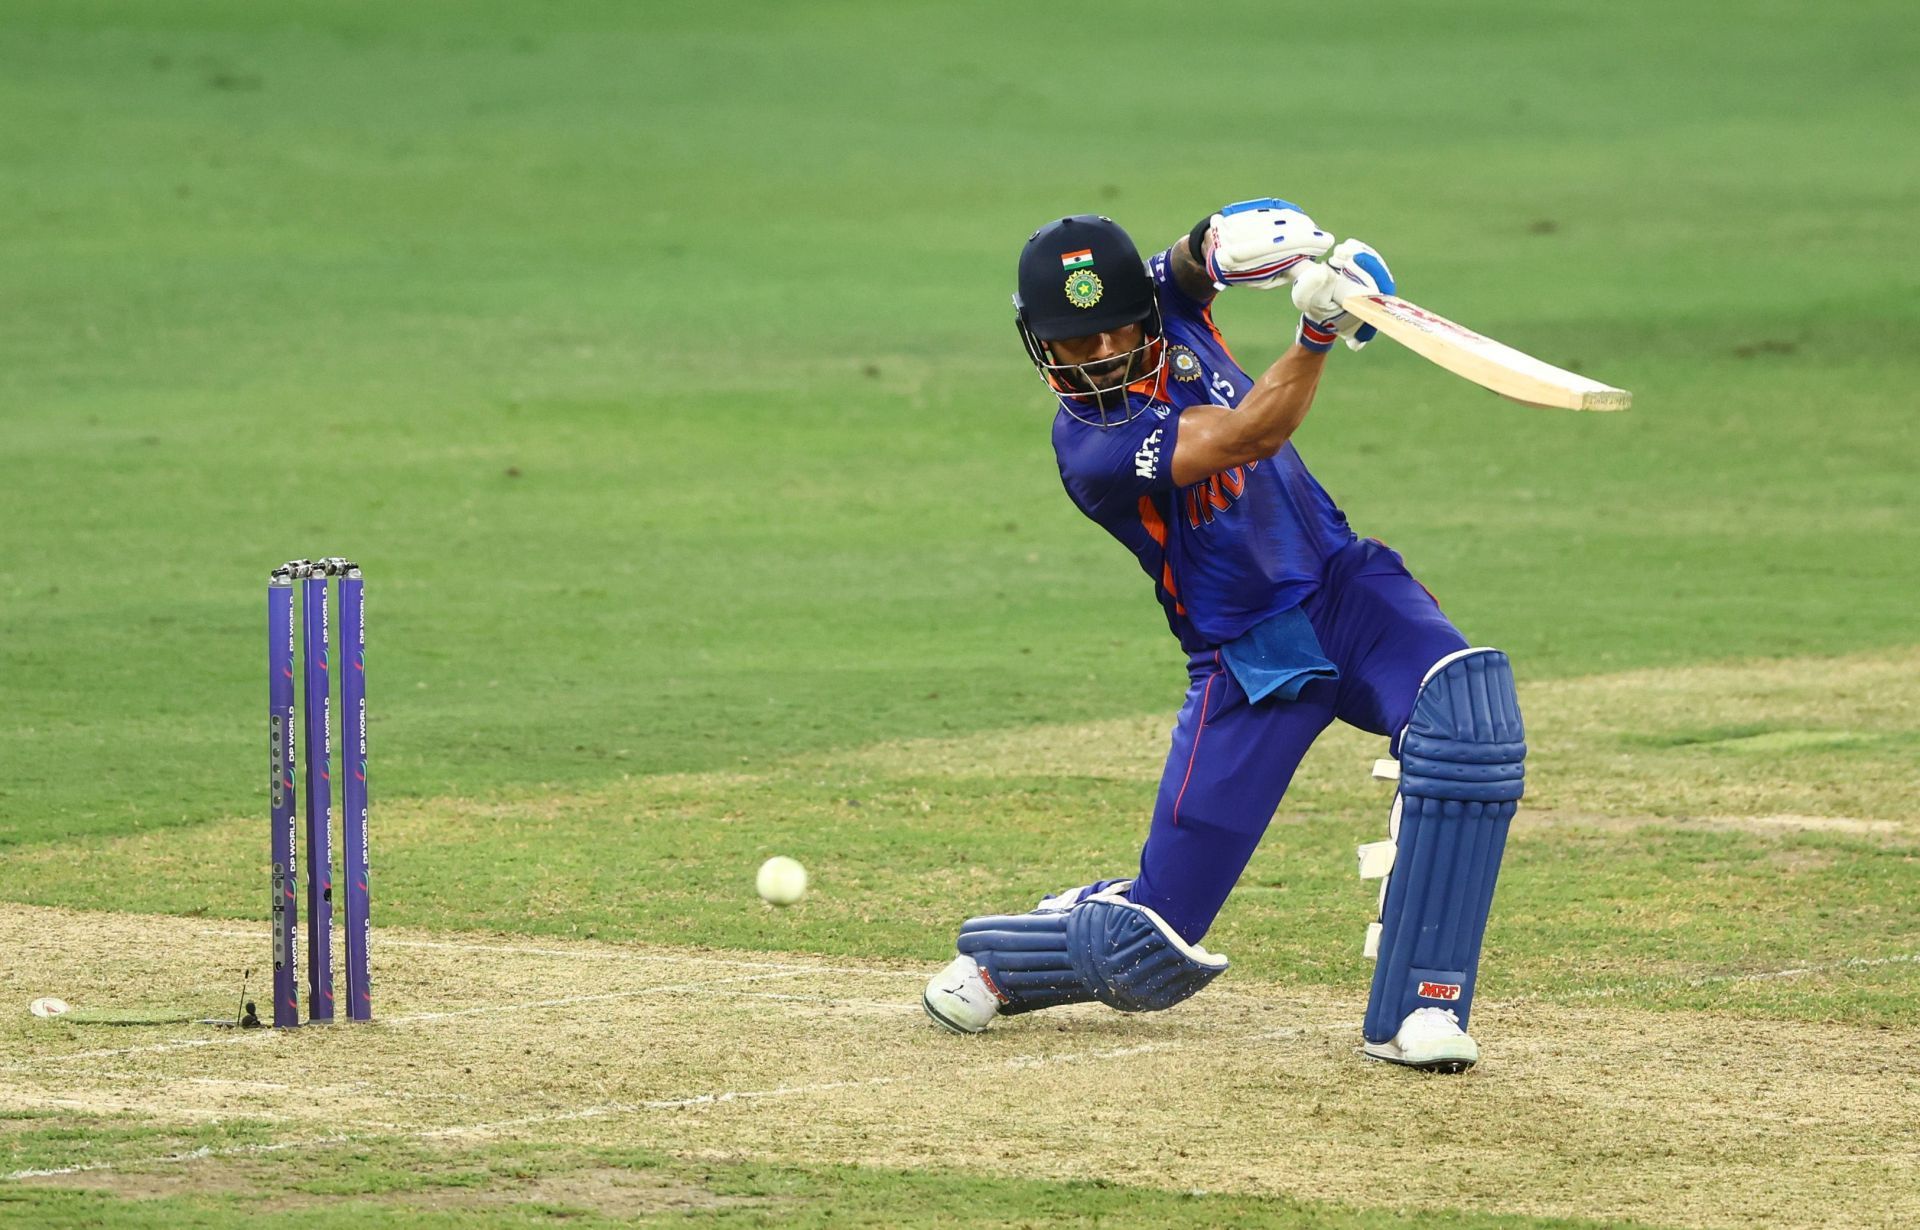 Virat Kohli played a few breathtaking shots during his innings.